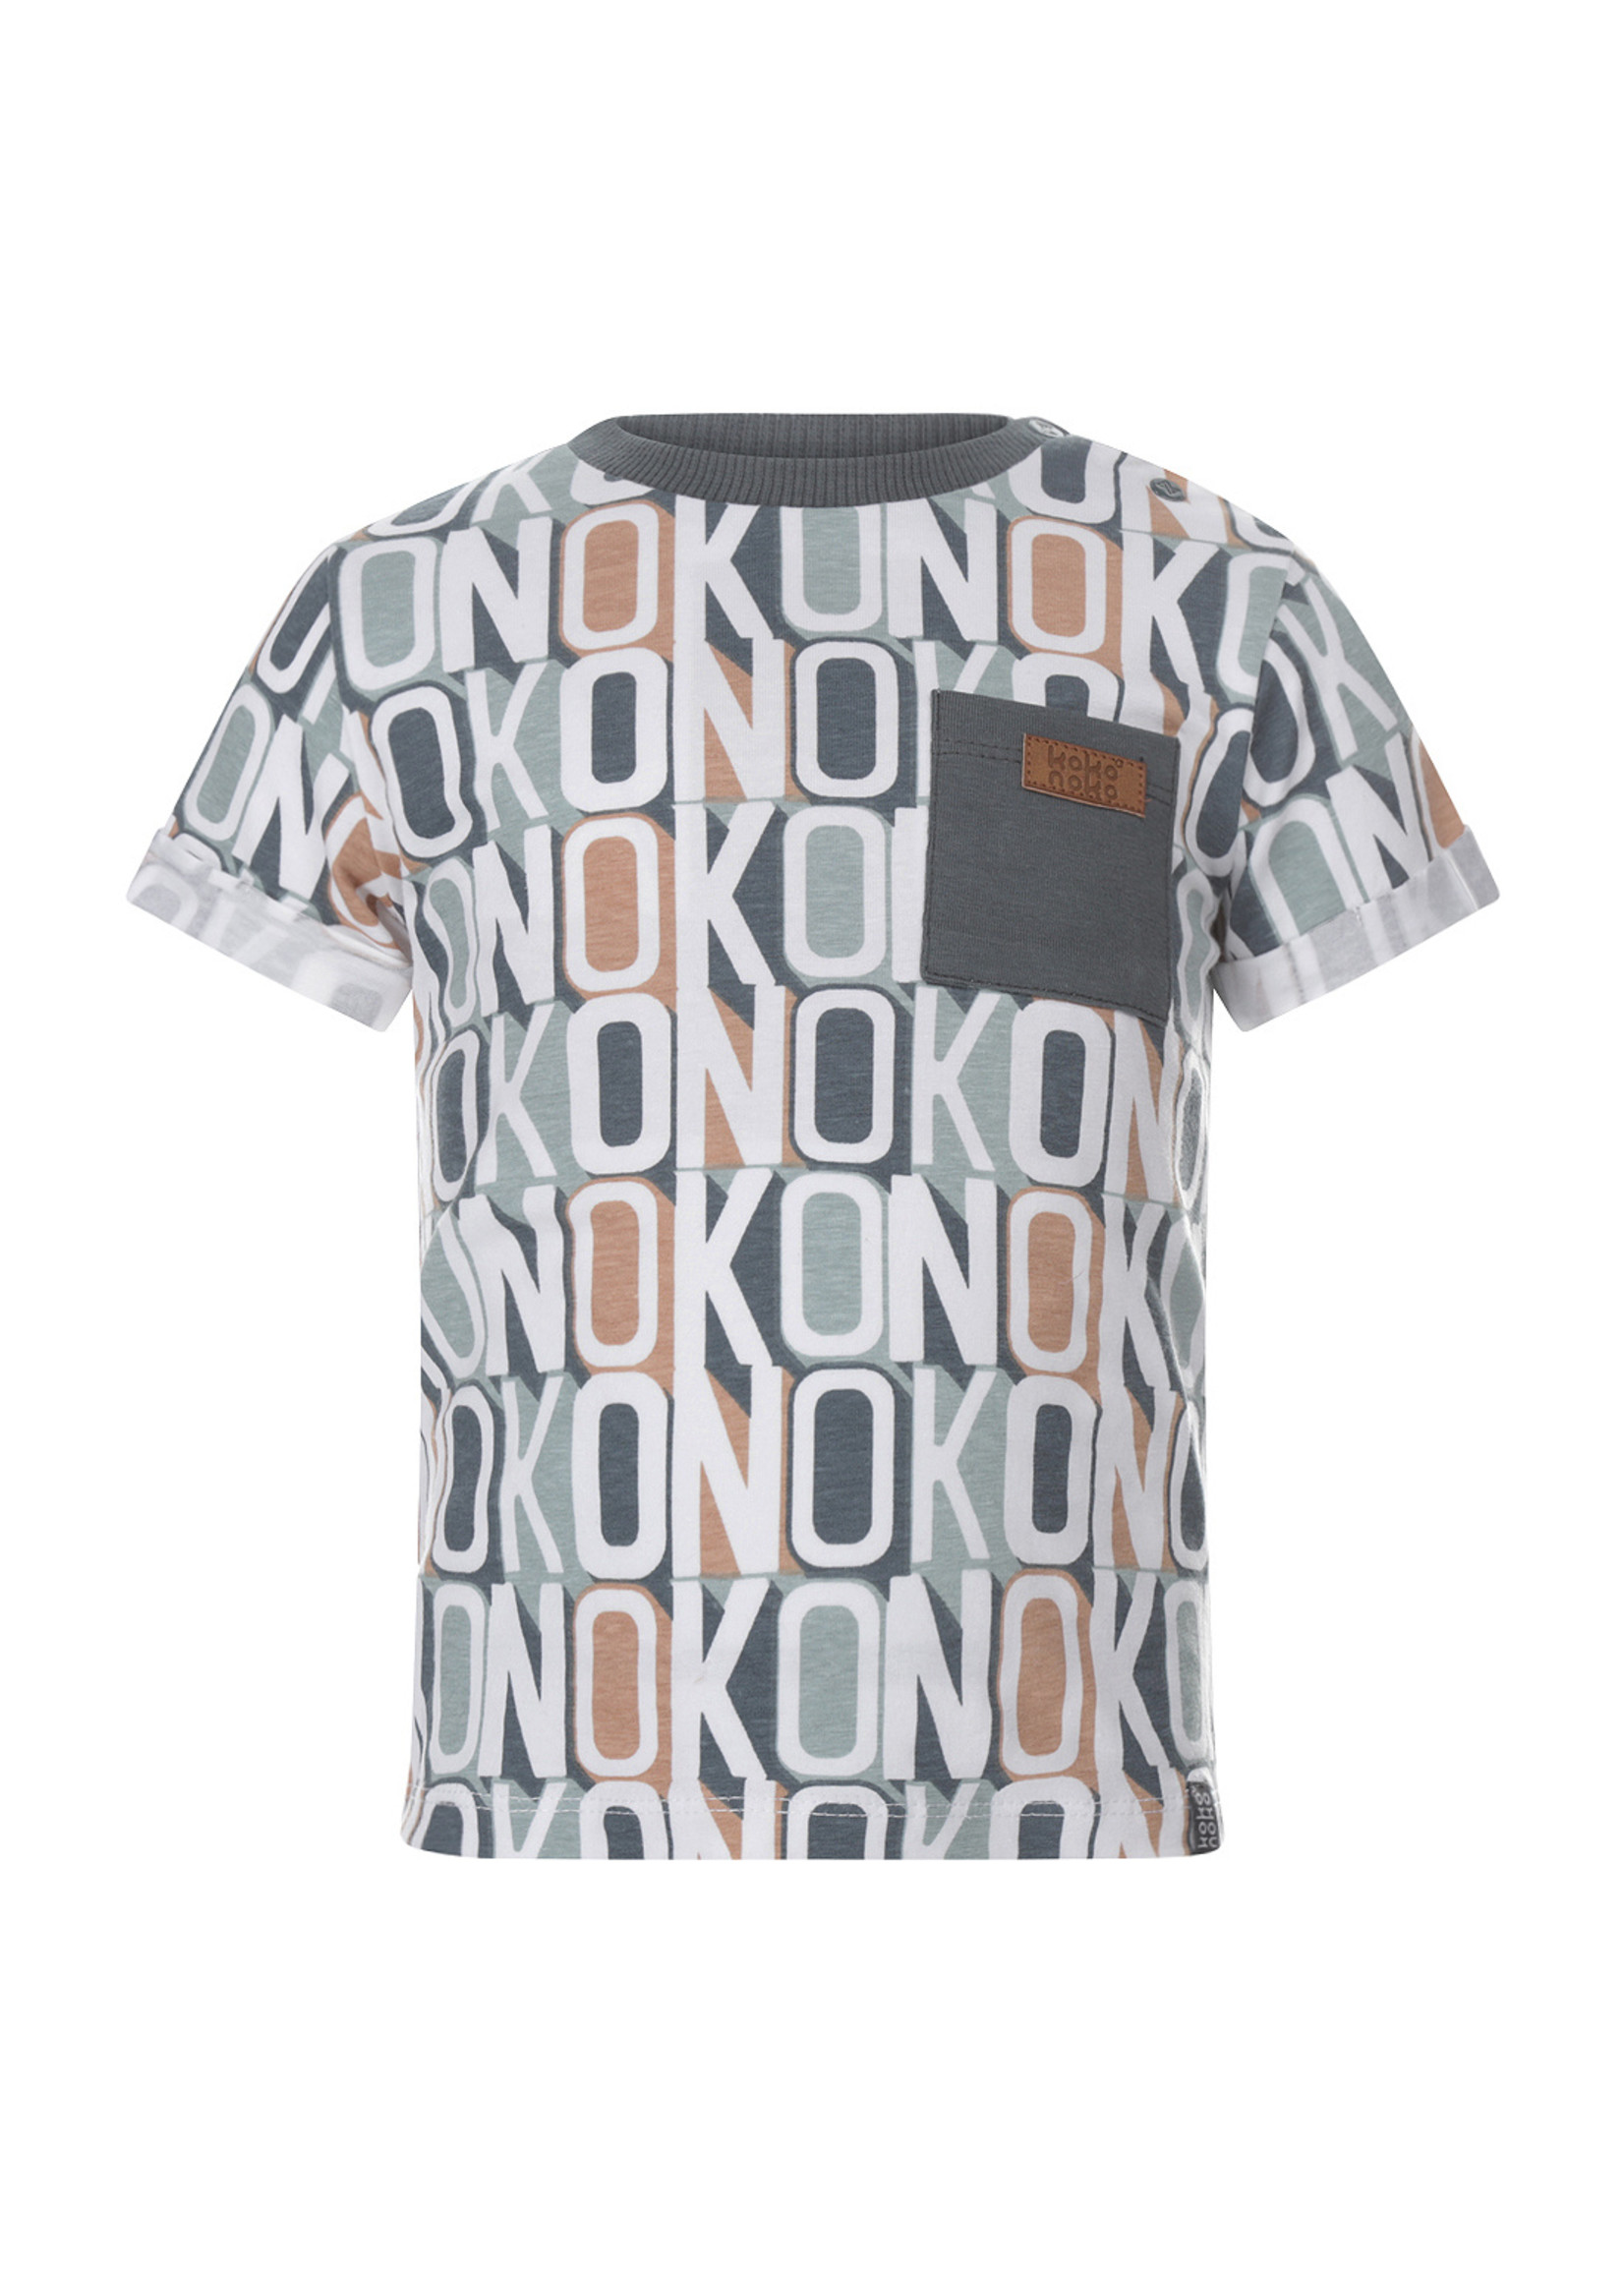 Koko Noko T-shirt print